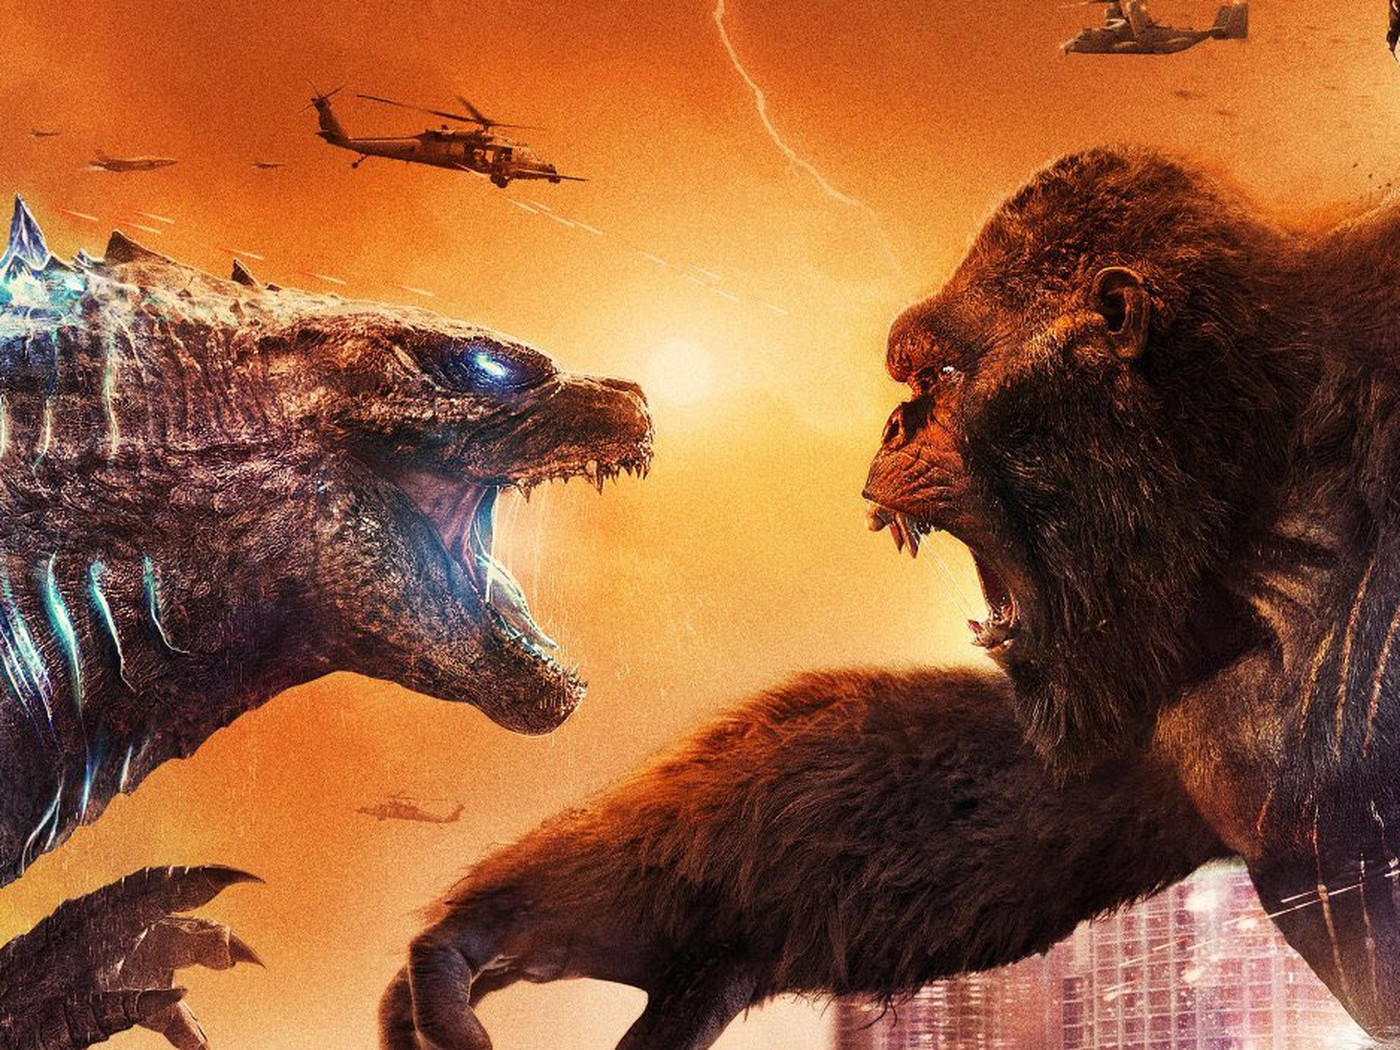 Godzilla vs. Kong review: Full of holes, but fun as hell